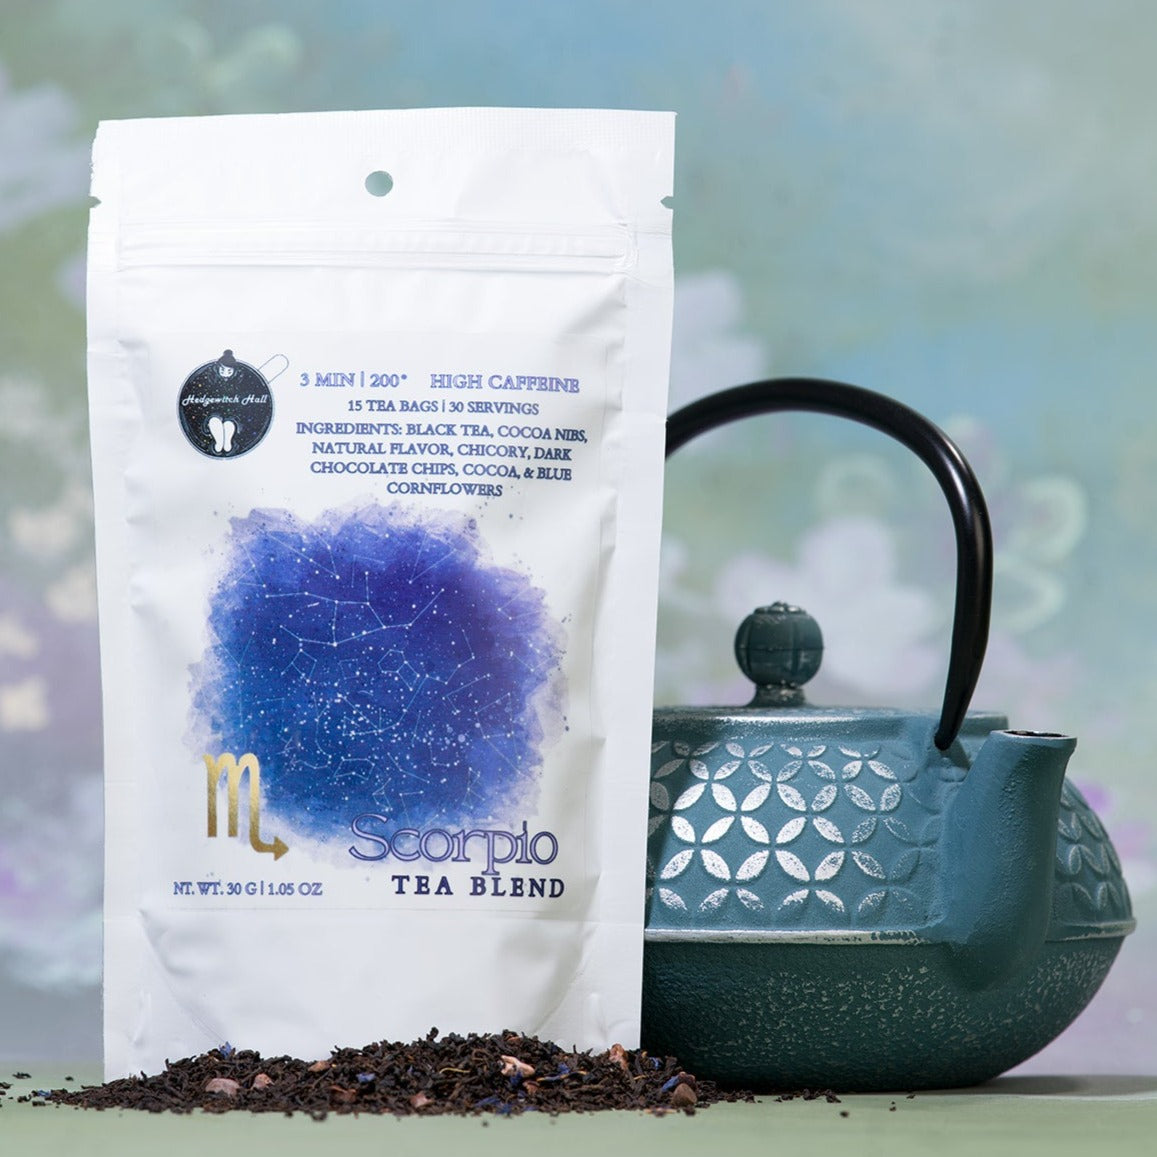 Product photo of Scorpio tea blend and teal teapot.